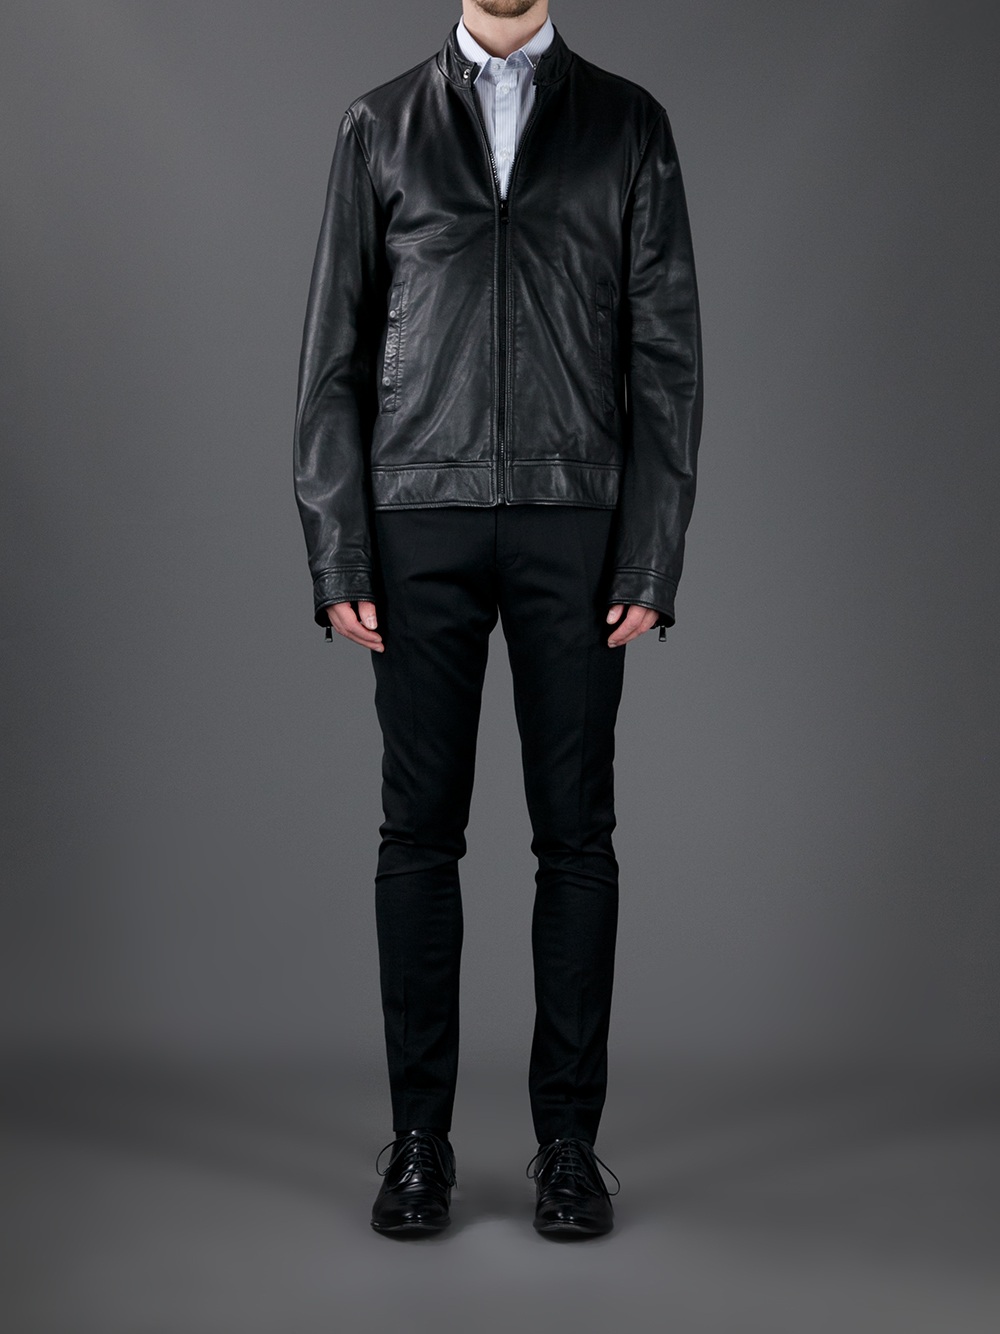 Lyst - Dolce & Gabbana Leather Jacket in Black for Men